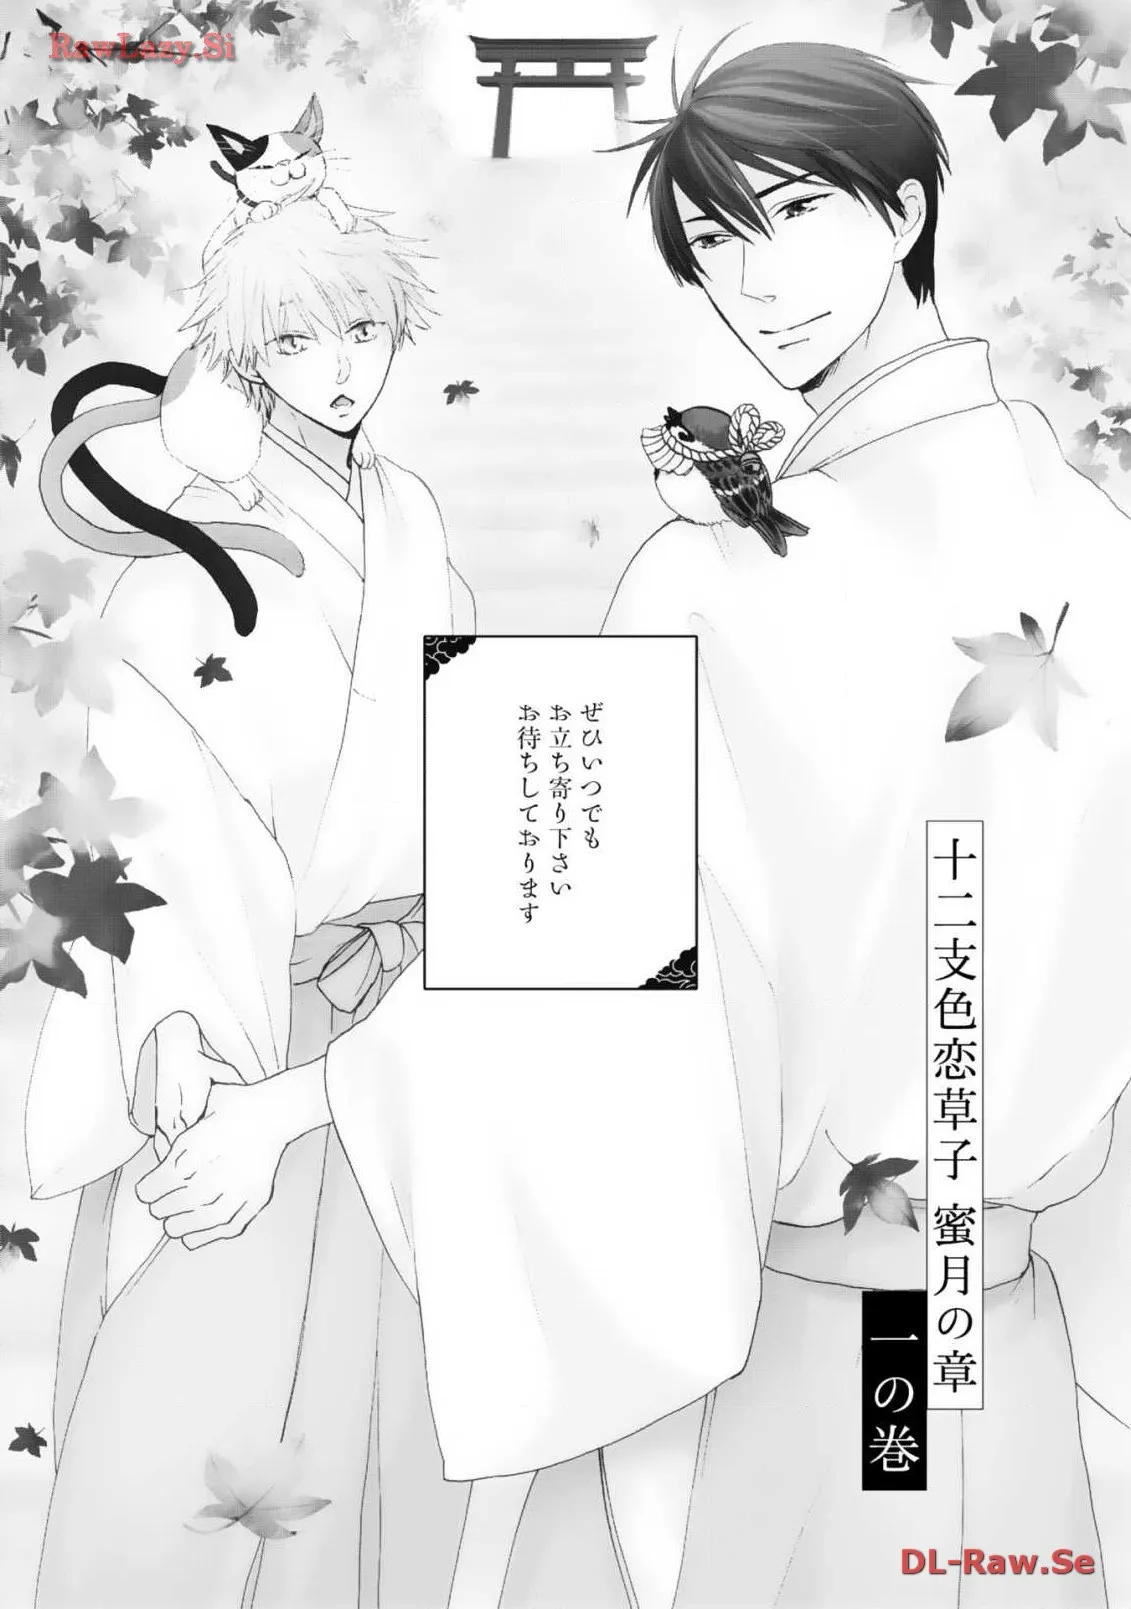 十二支色恋草子～蜜月の章～ - 1 raw - MangaJP